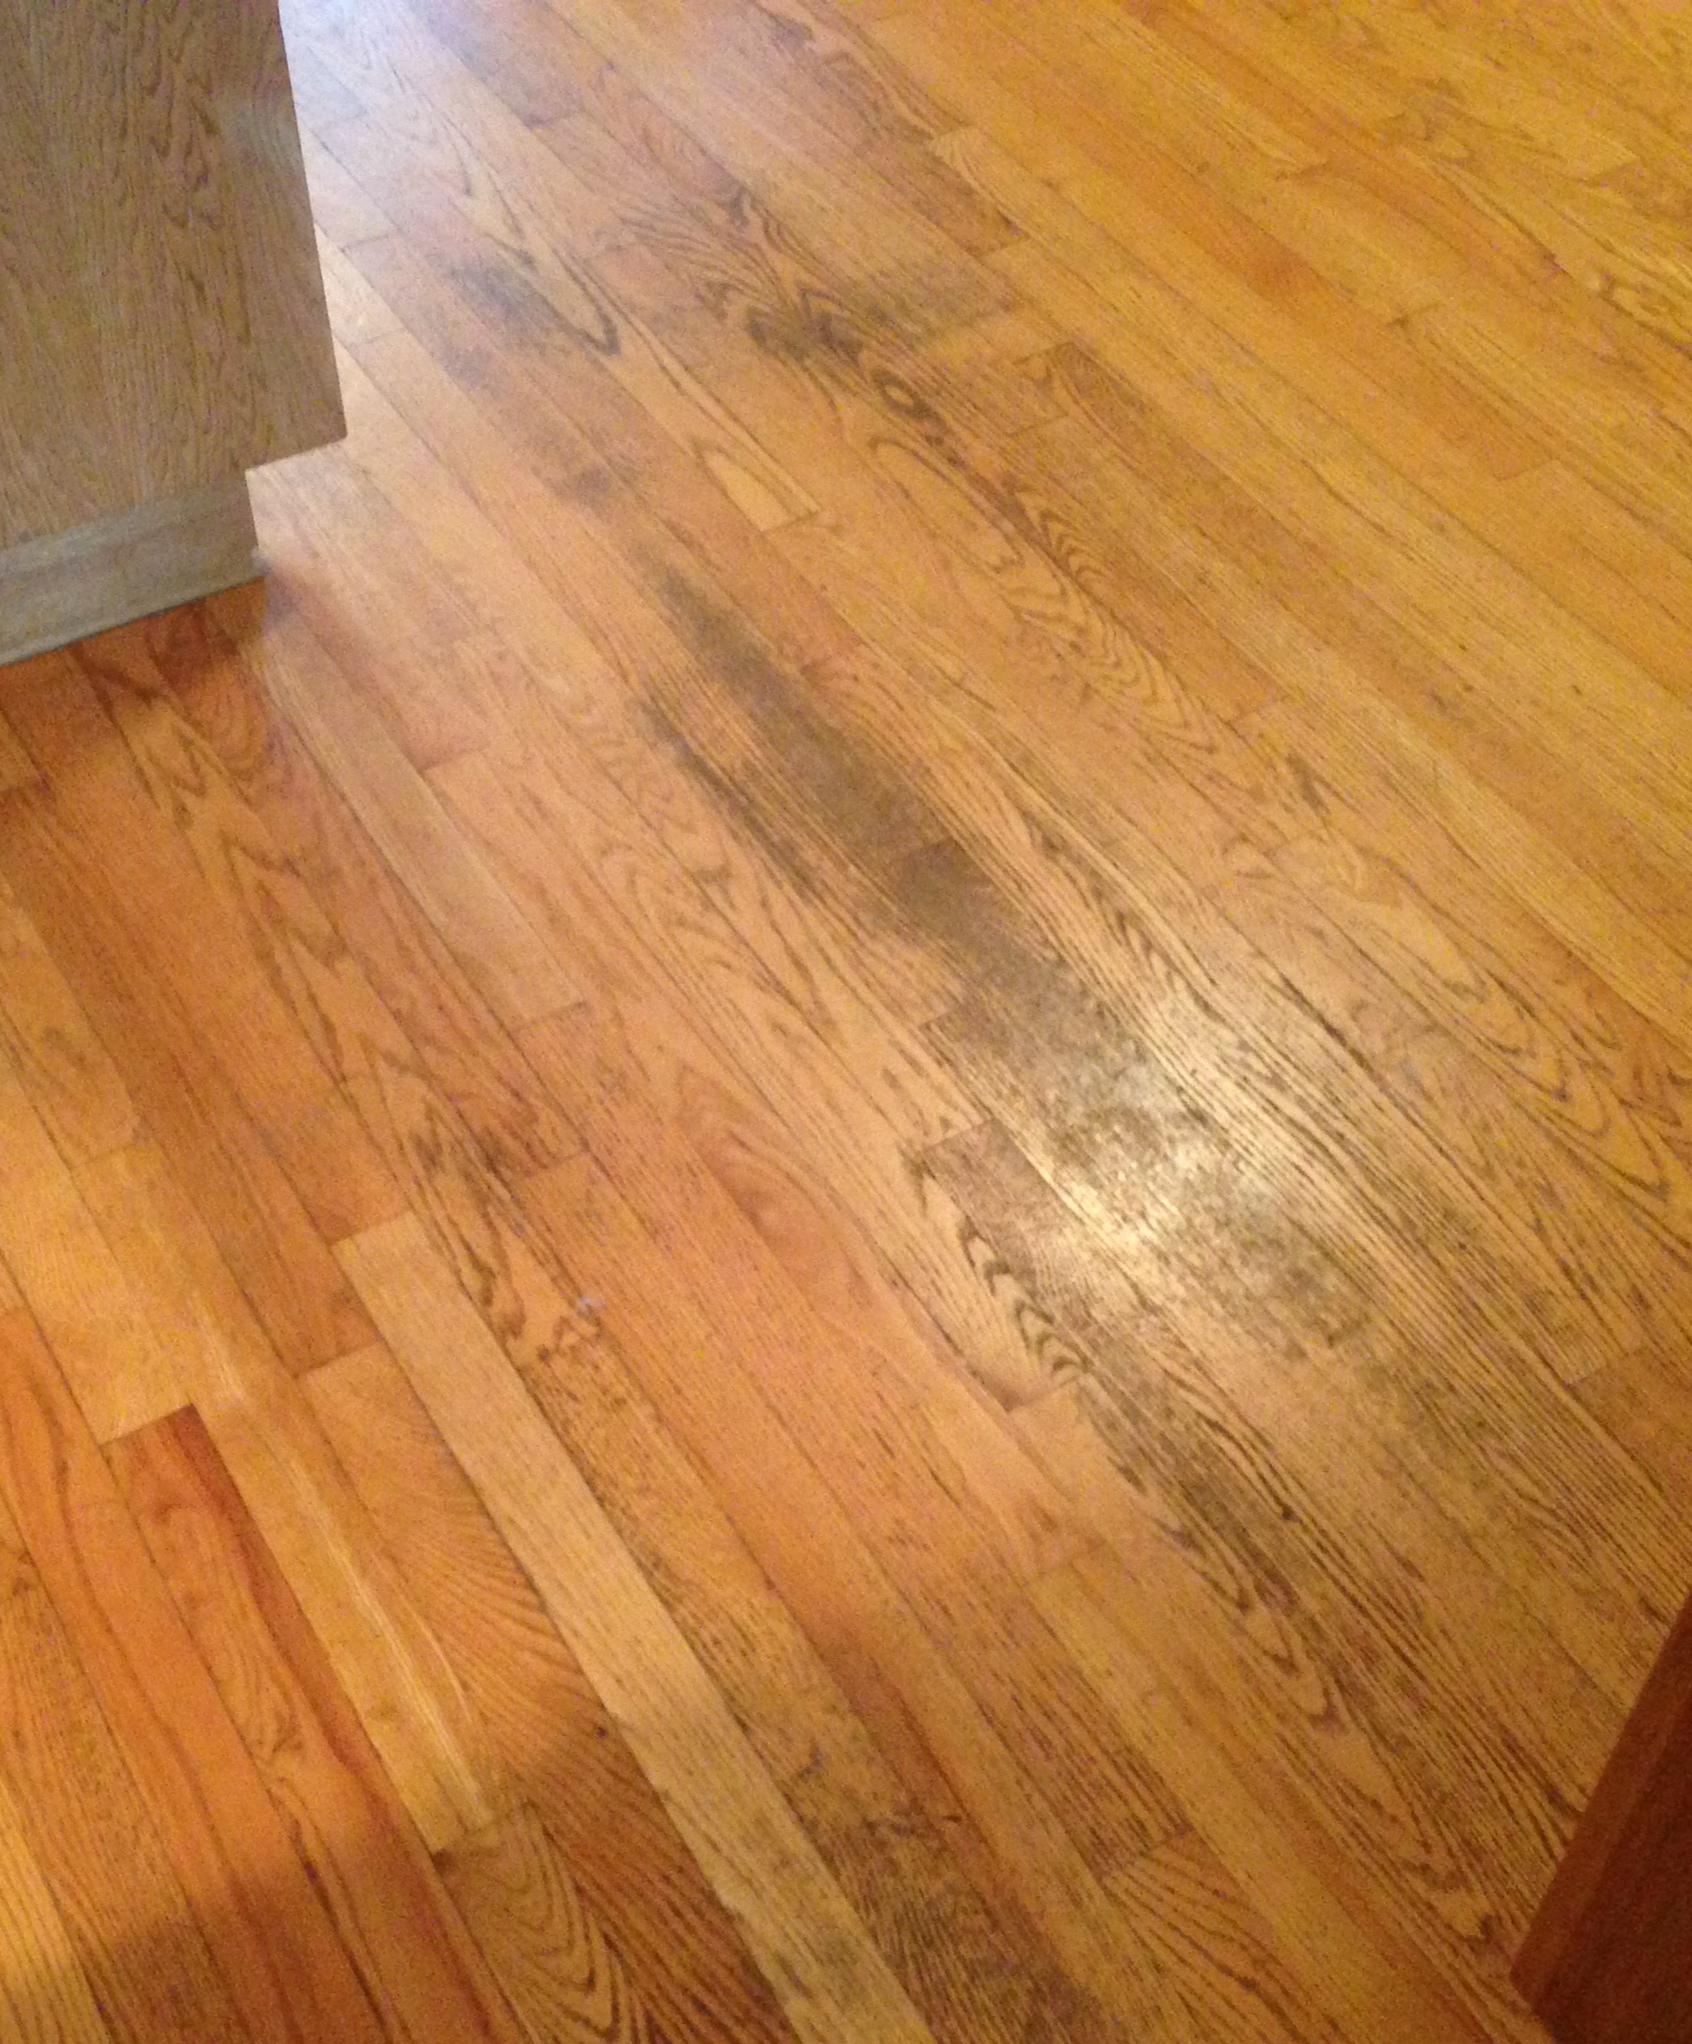 Hardwood Floor Refinishing, Hardwood Floor Finish Problems